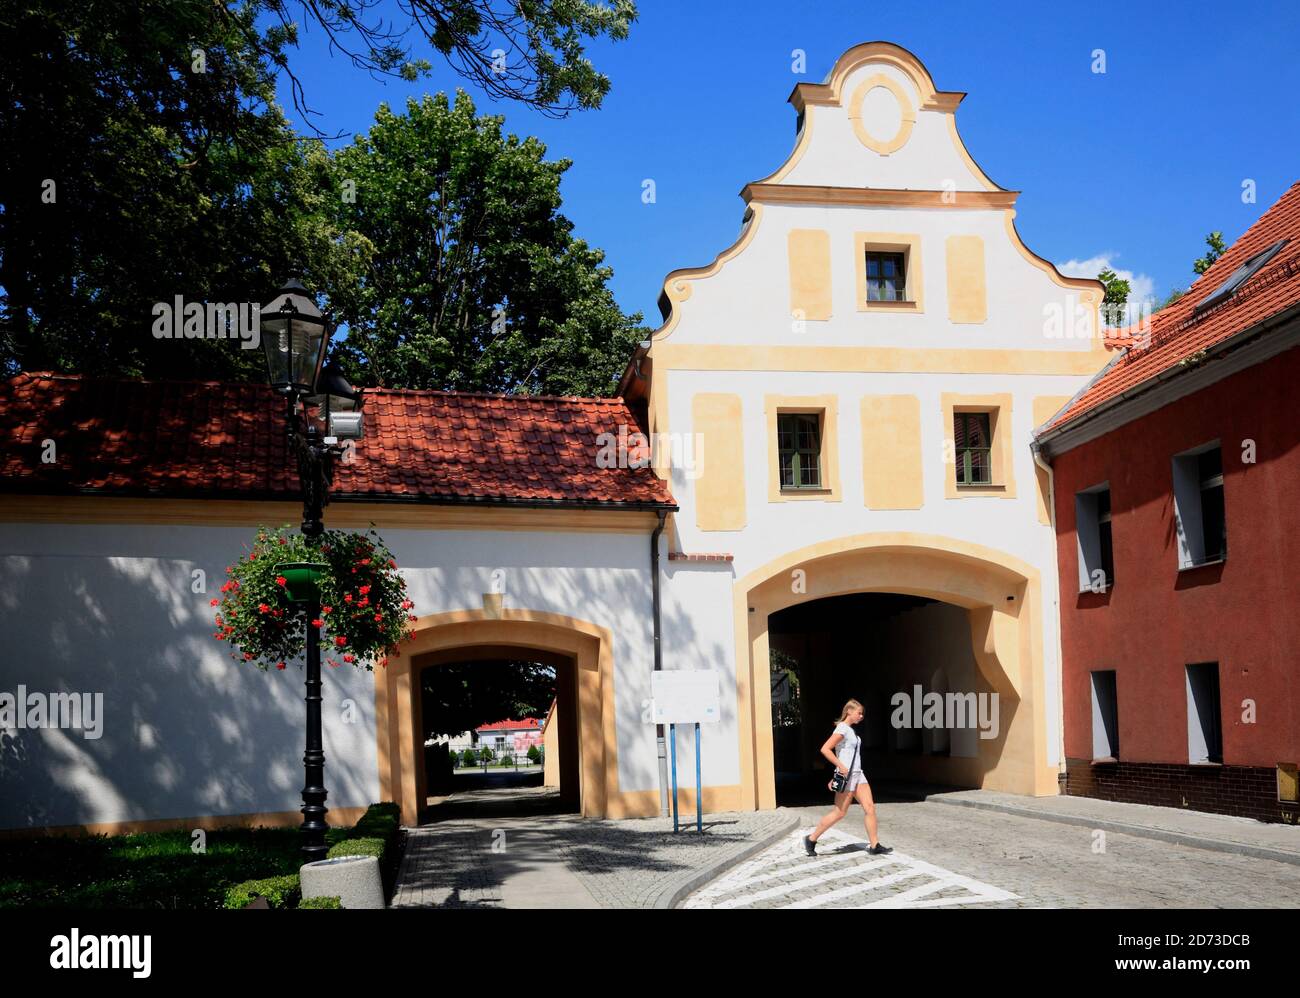 Brama Zamkowa (Schlosstor), Glogowek (Oberglogau), Silesia, Poland, Europe Stock Photo